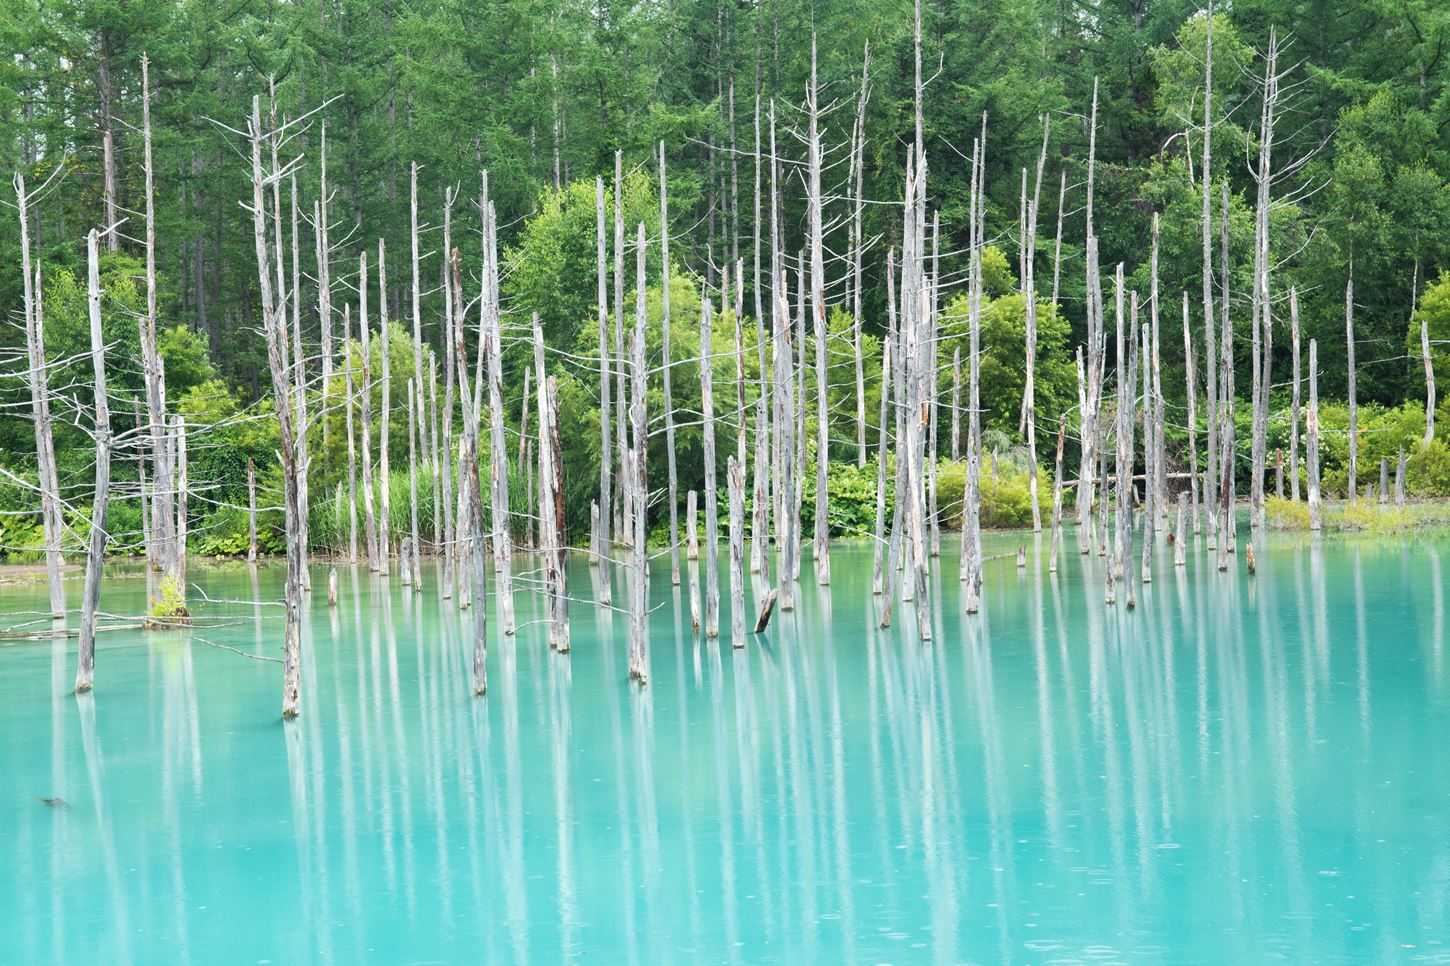 Video: Four Seasons of Blue Pond, a popular sightseeing spot in Hokkaido